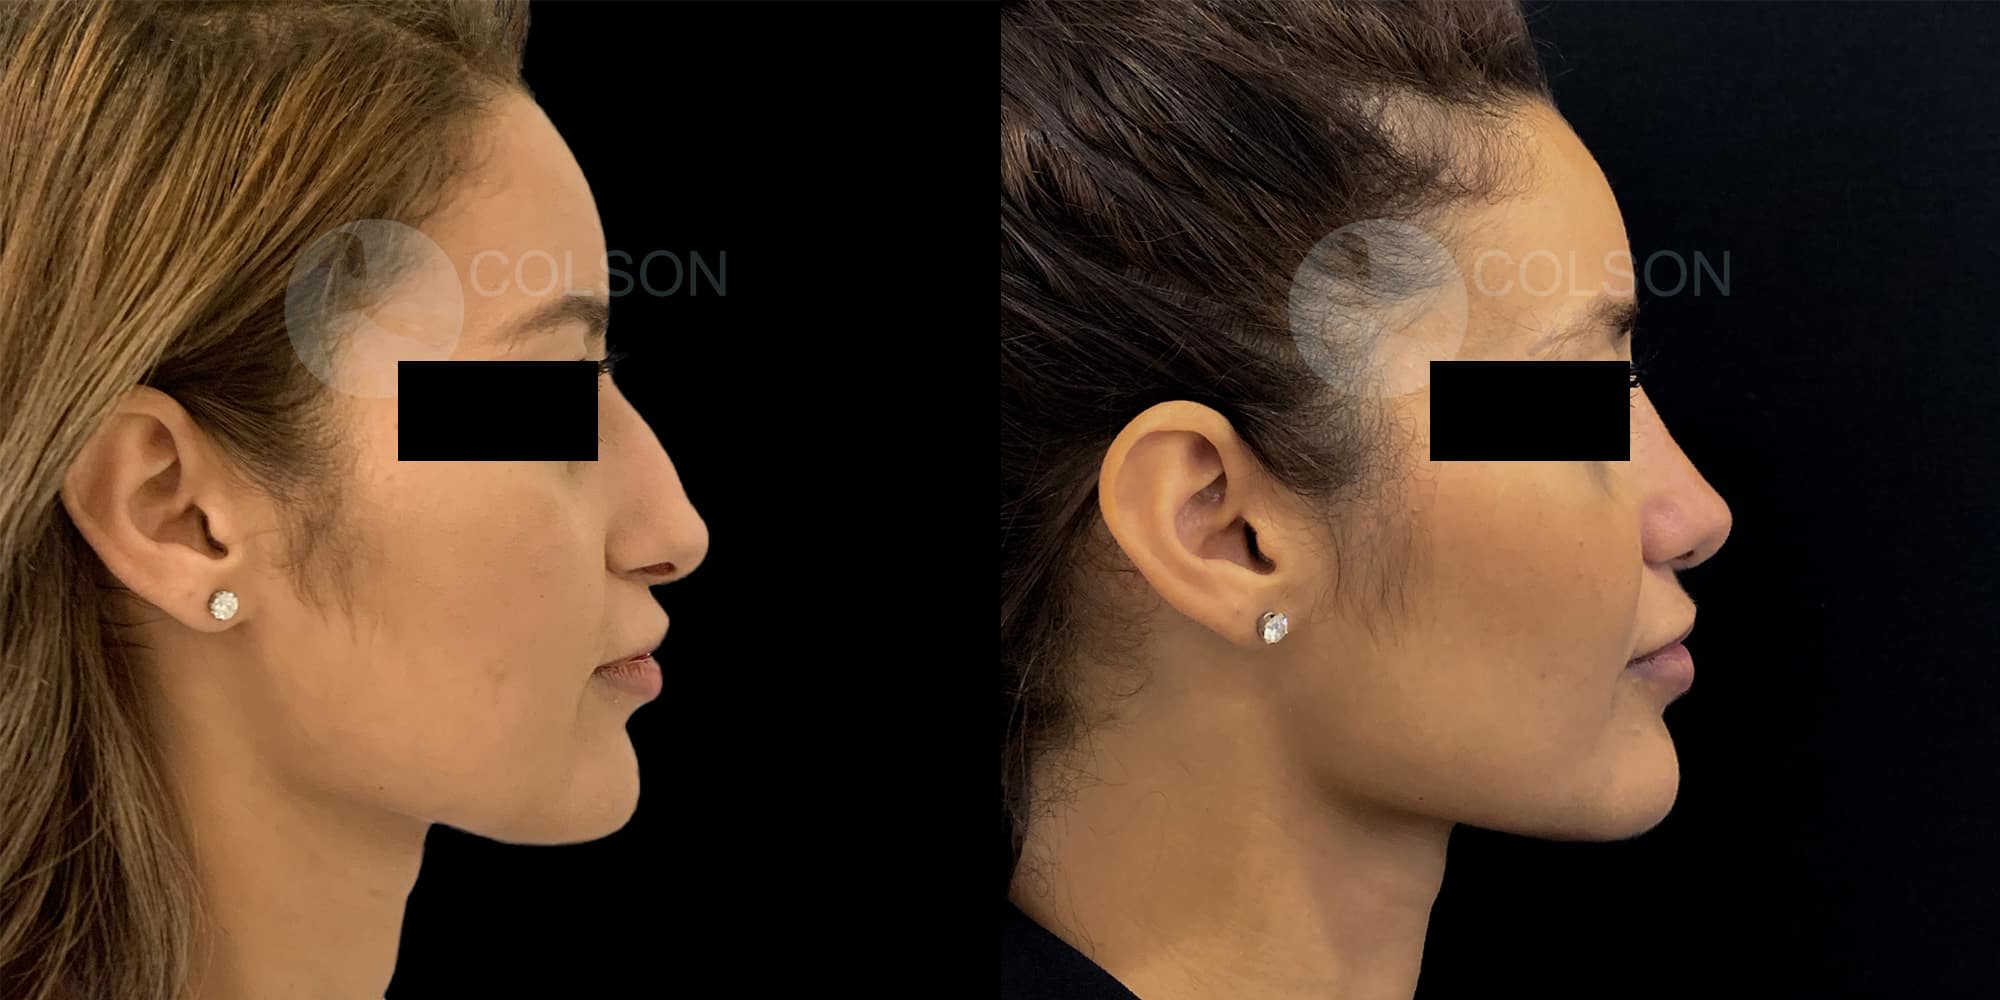 Dr Colson - Chirurgie visage - Rhinoplastie Profil